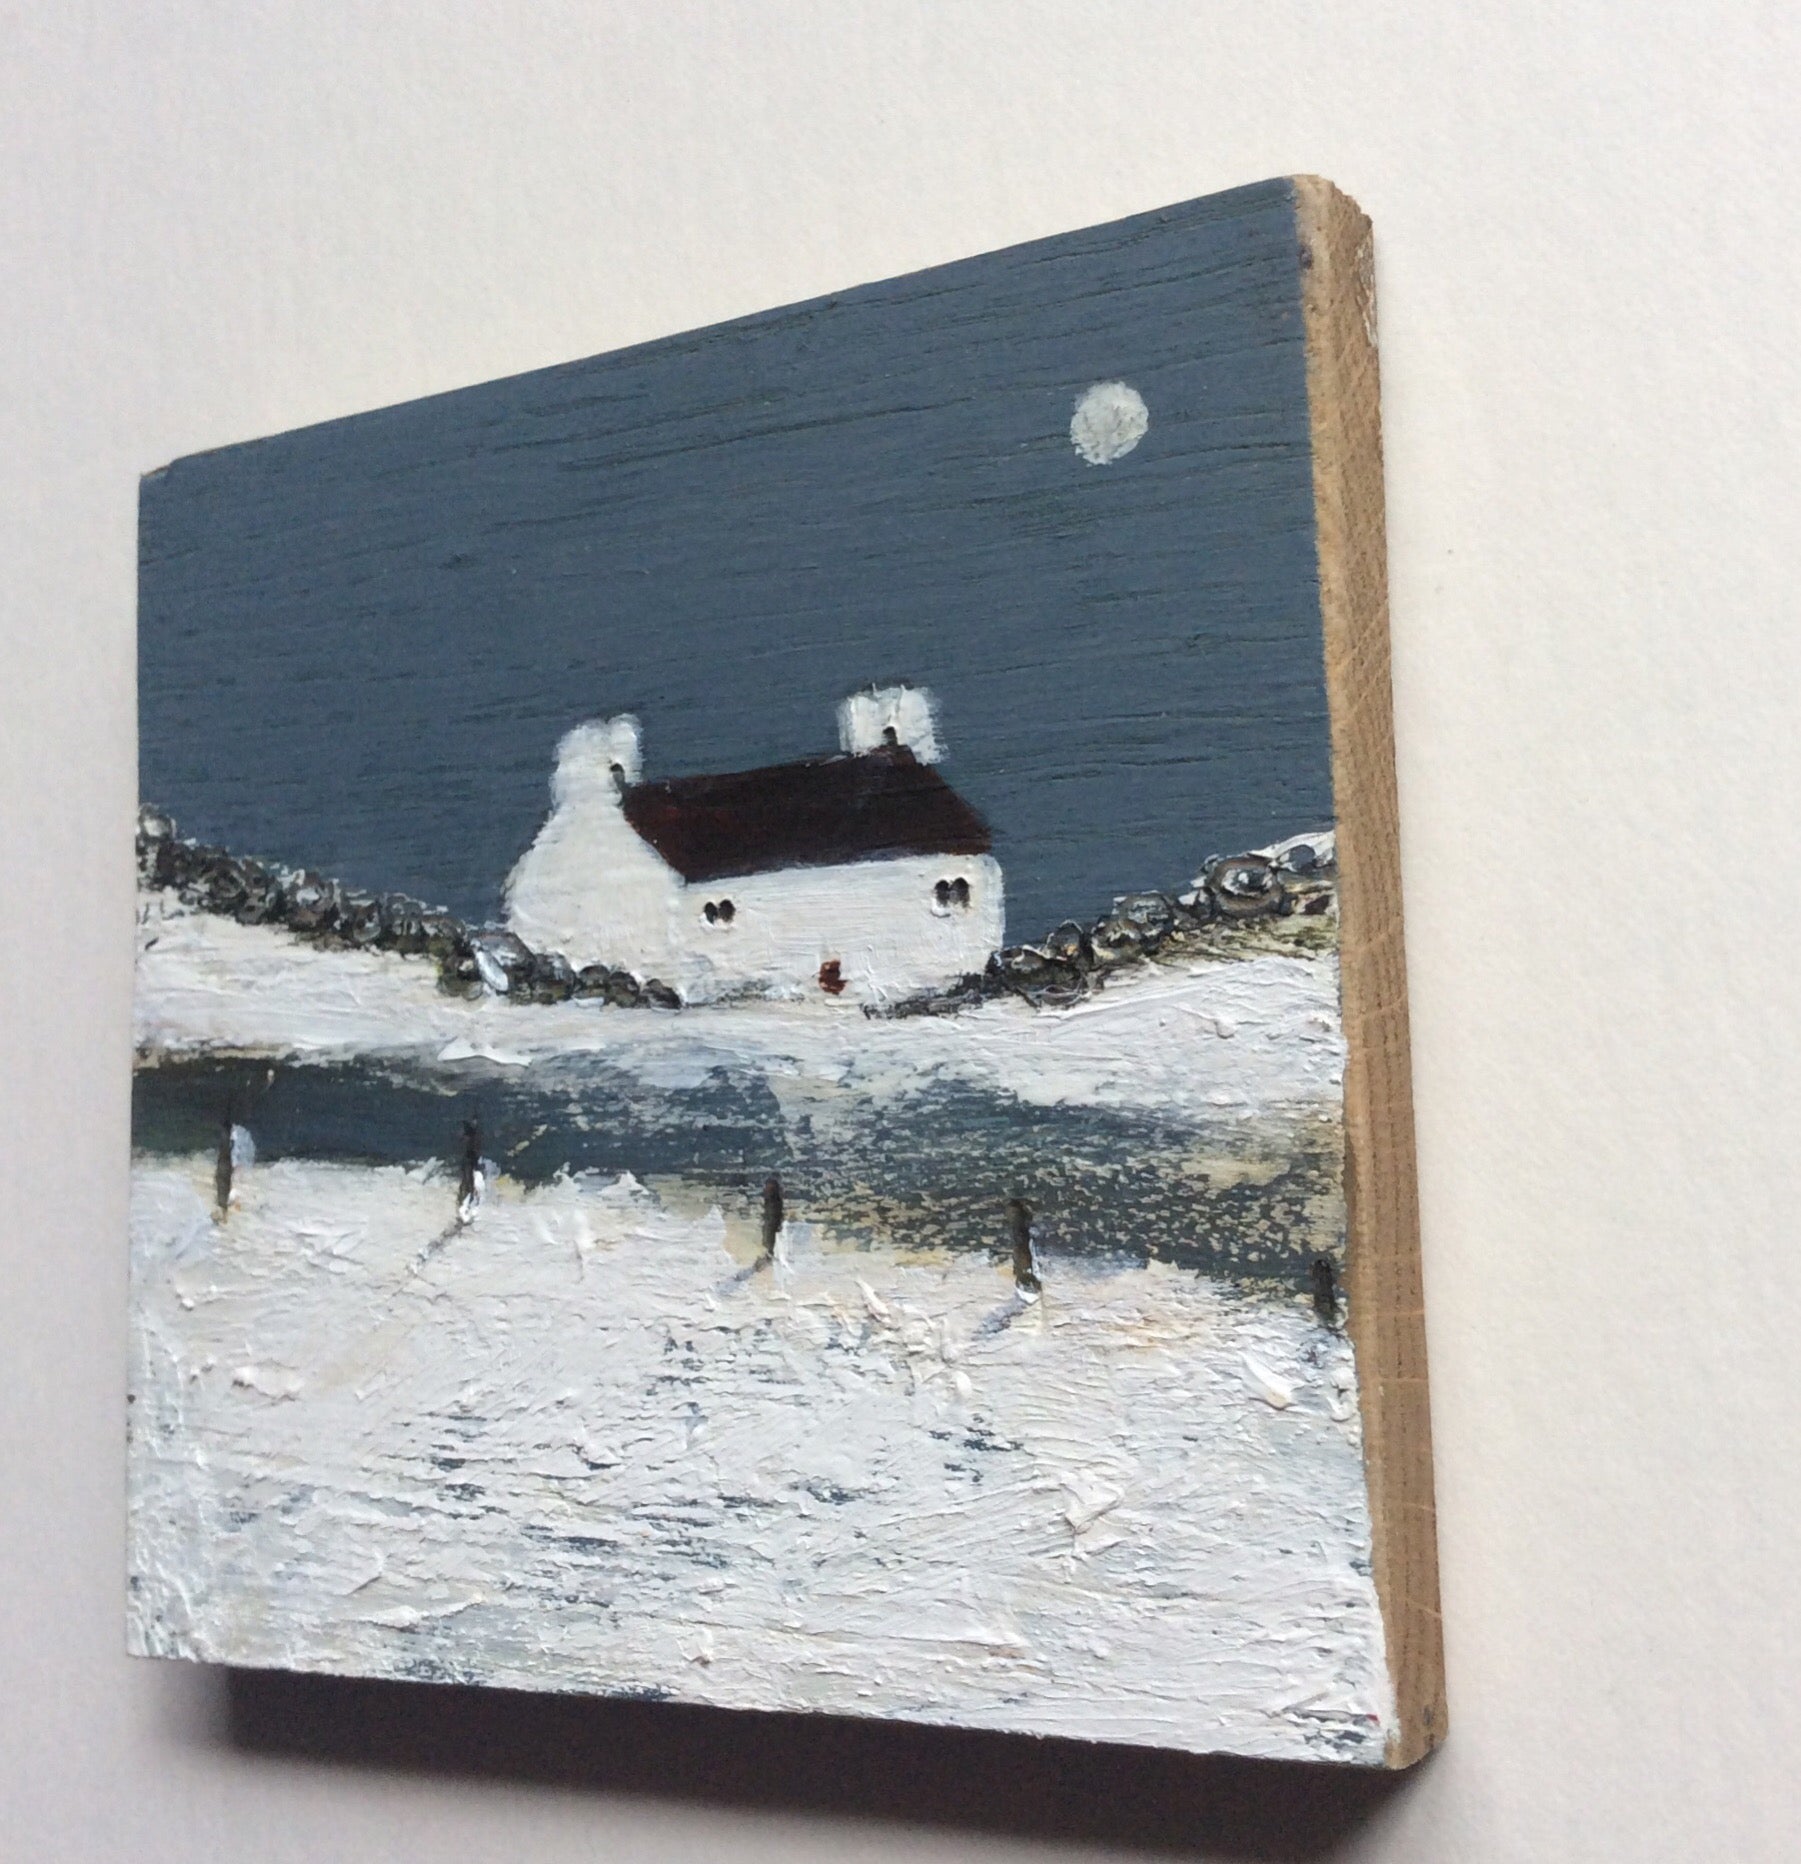 Mini Mixed Media Art on wood By Louise O'Hara - "A harsh winter”